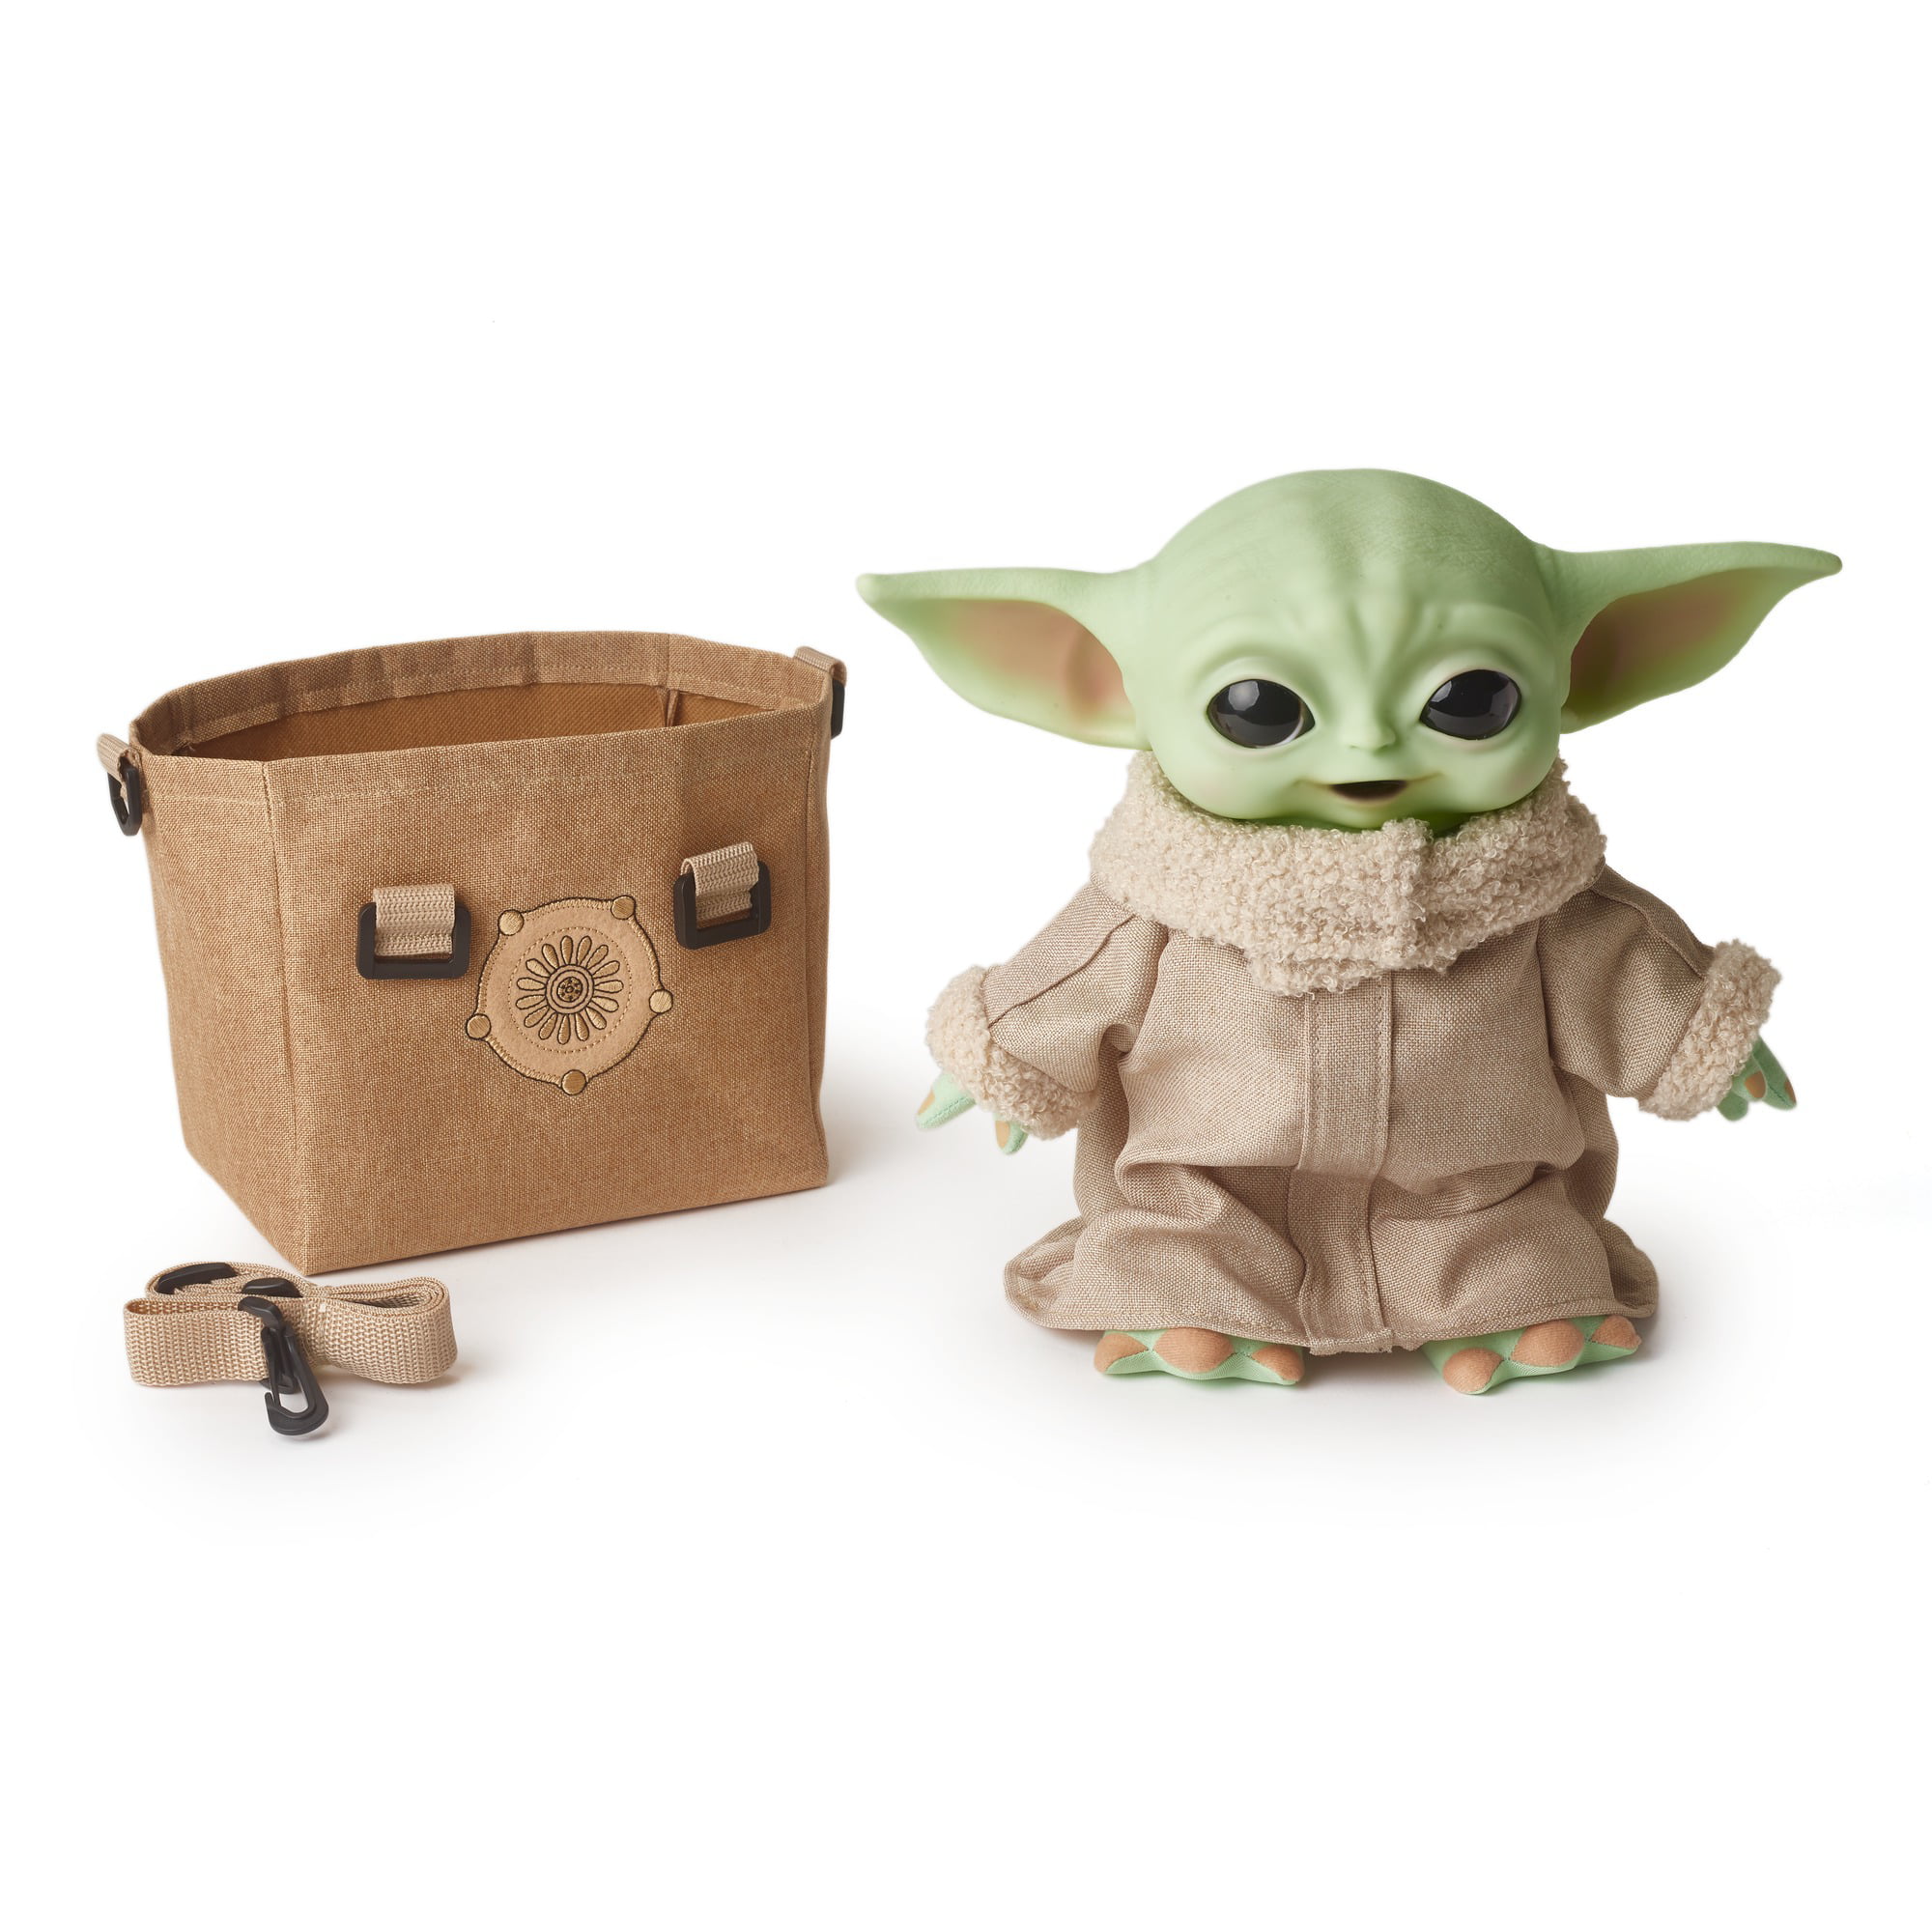 Star Wars Mandalorian The Child 11 Inch Baby Yoda Plush Toy Disney Fast Shipping 